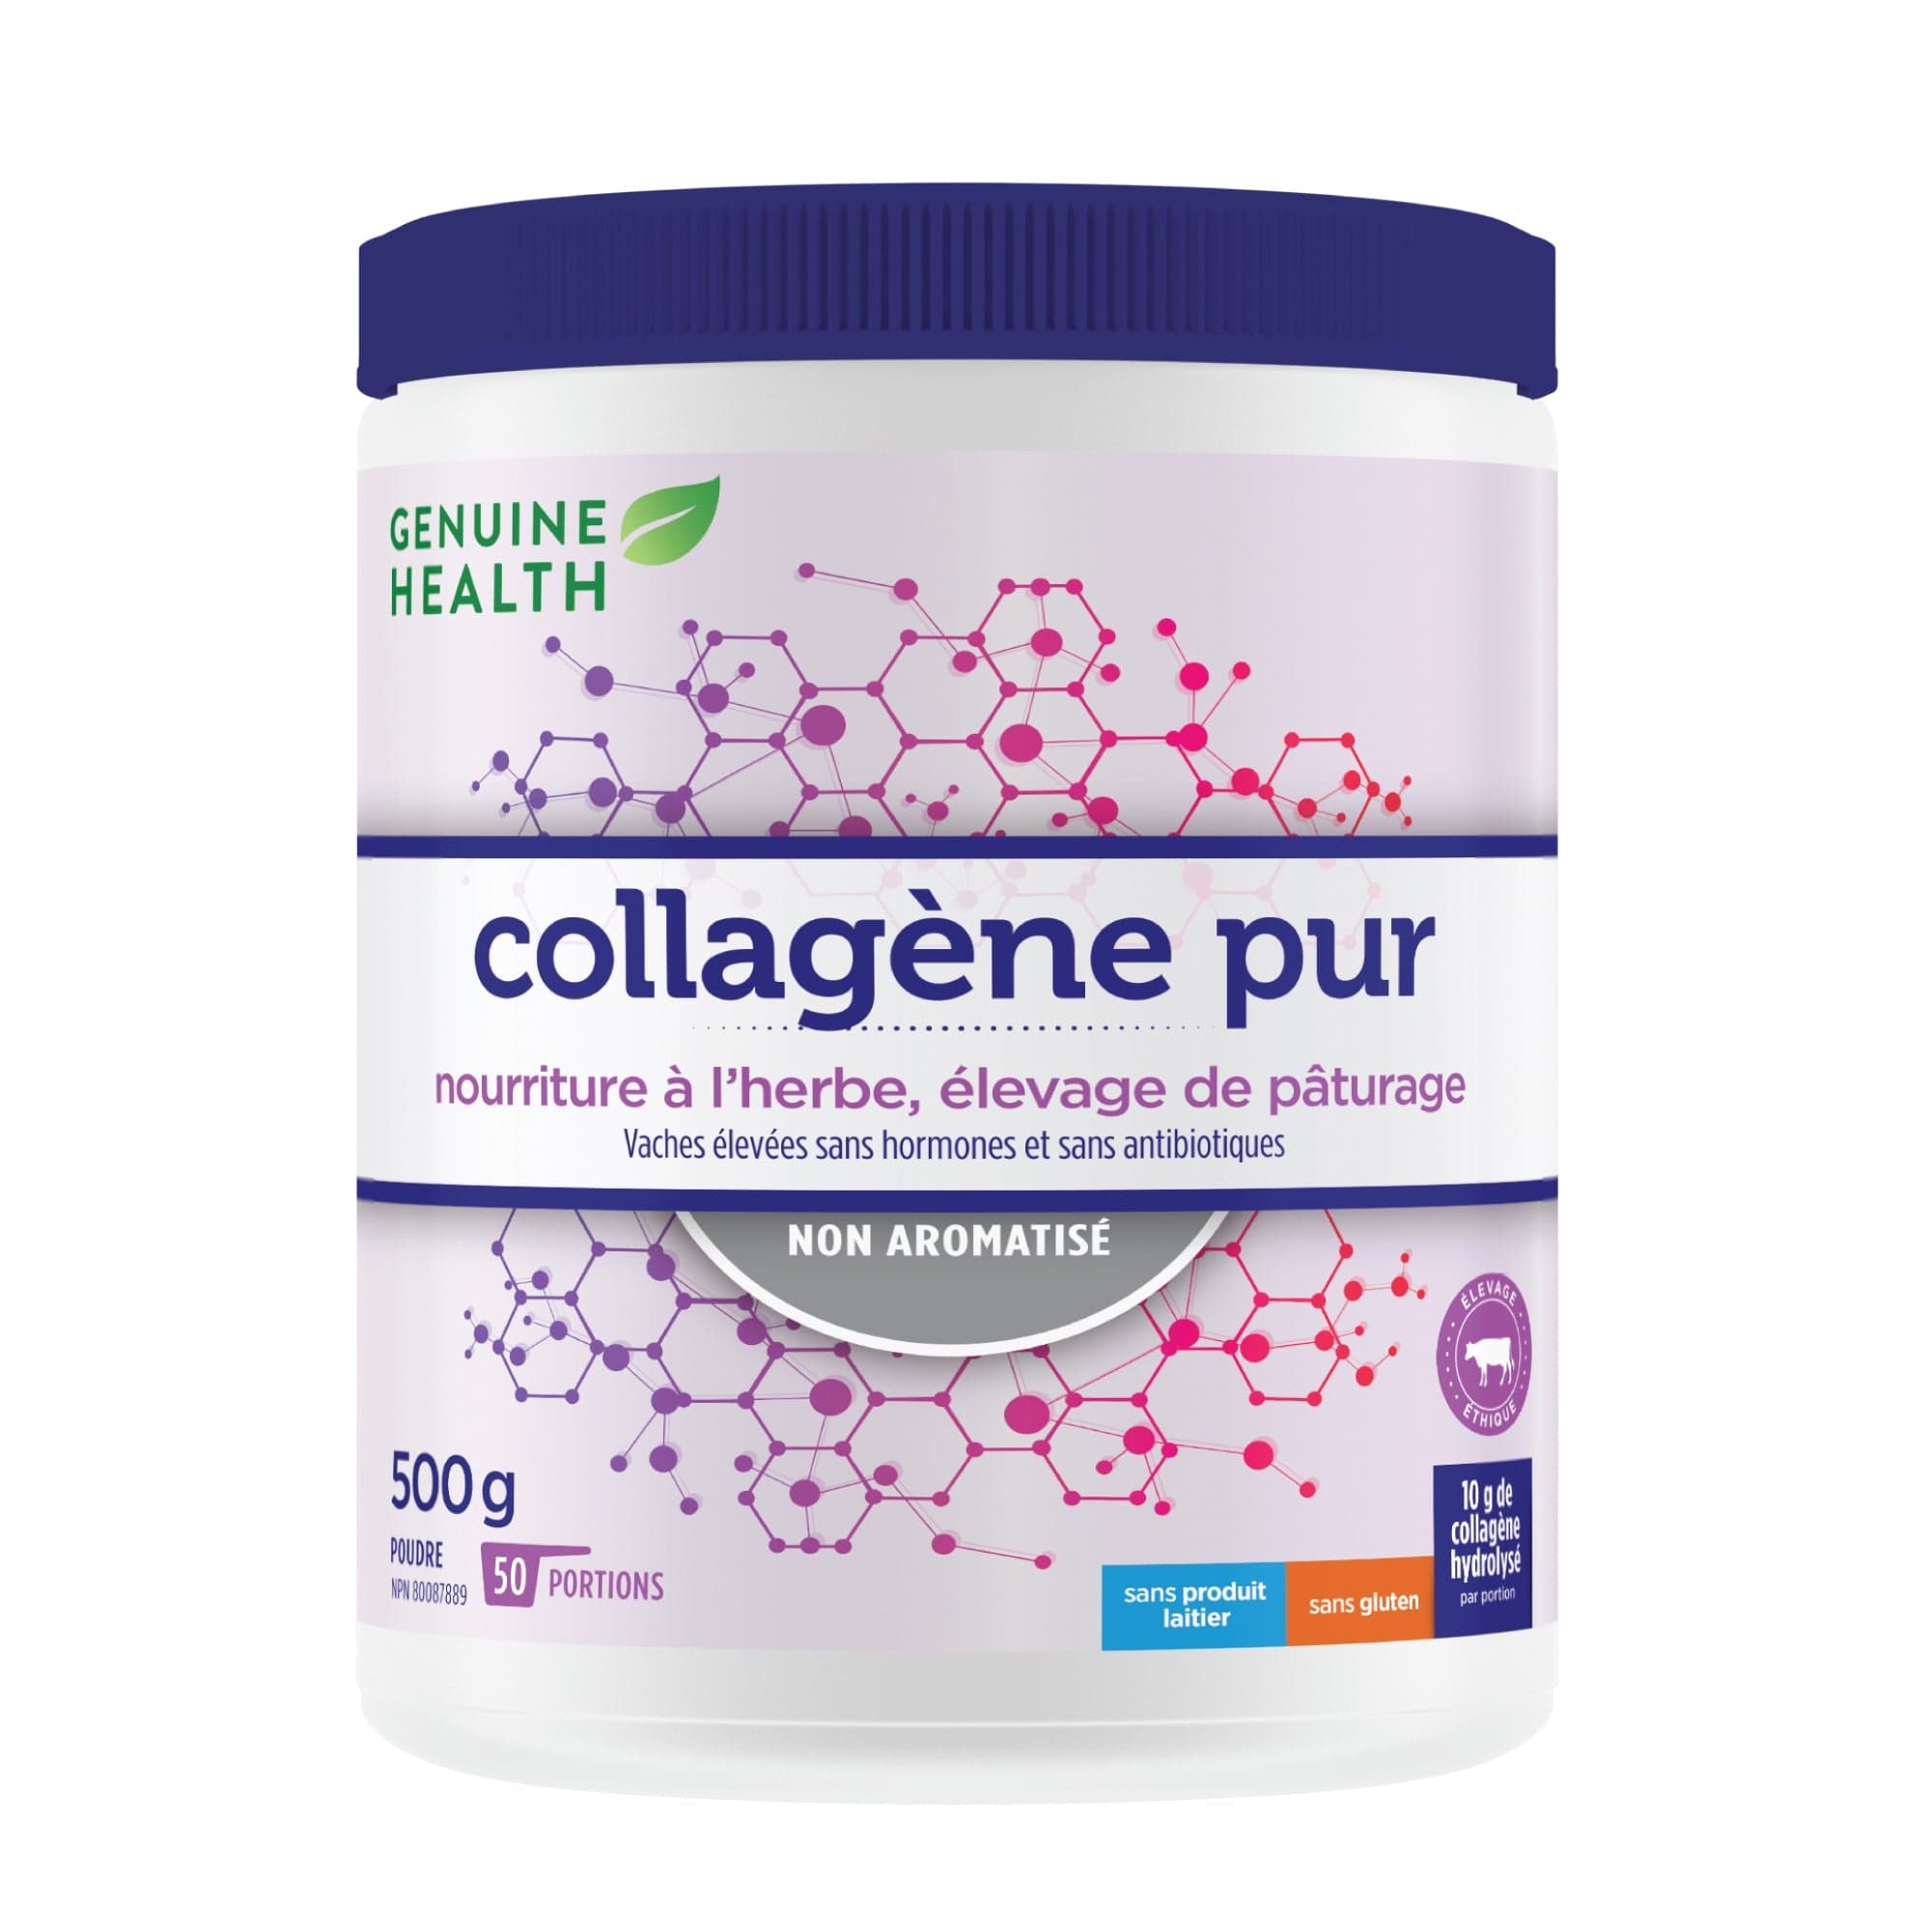 GENUINE HEALTH Suppléments Collagène bovin pur (non-aromatisé) 500g